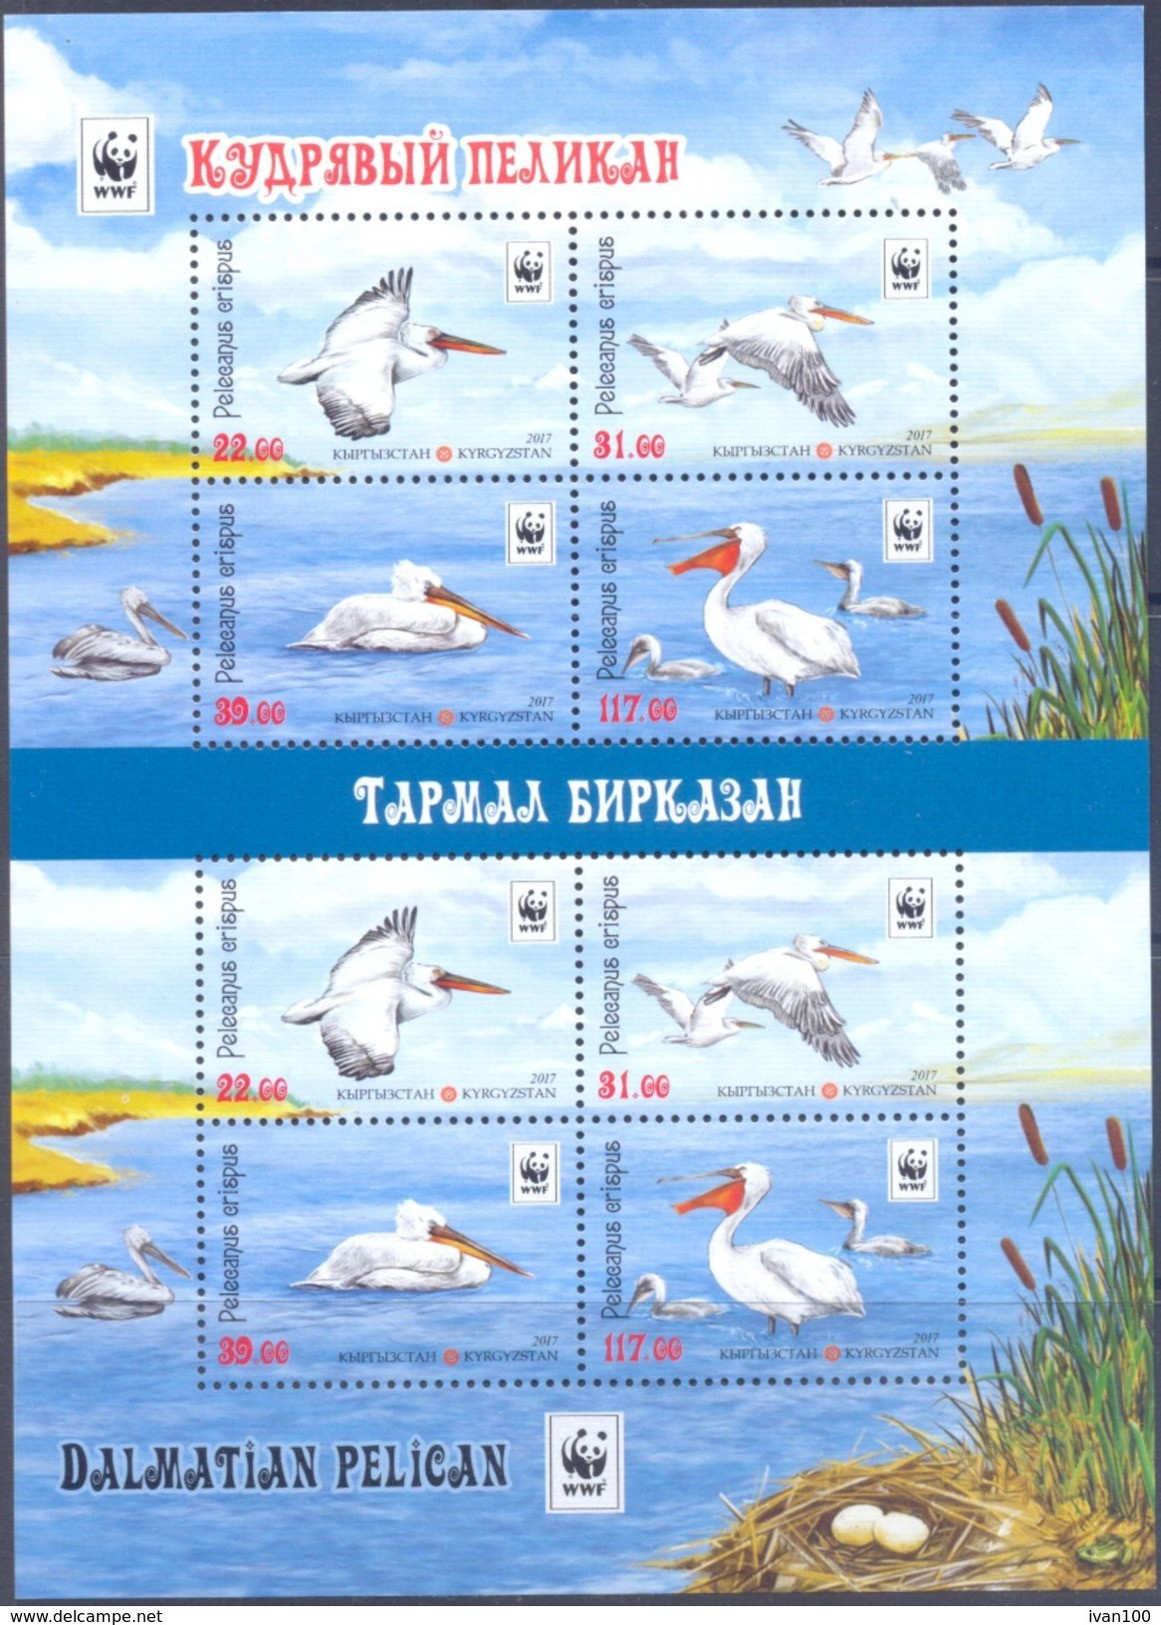 2017. Kyrgyzstan, WWF, Birds, Dalmatian Pelican, Sheetlet Perforated, Mint/ ** - Kyrgyzstan